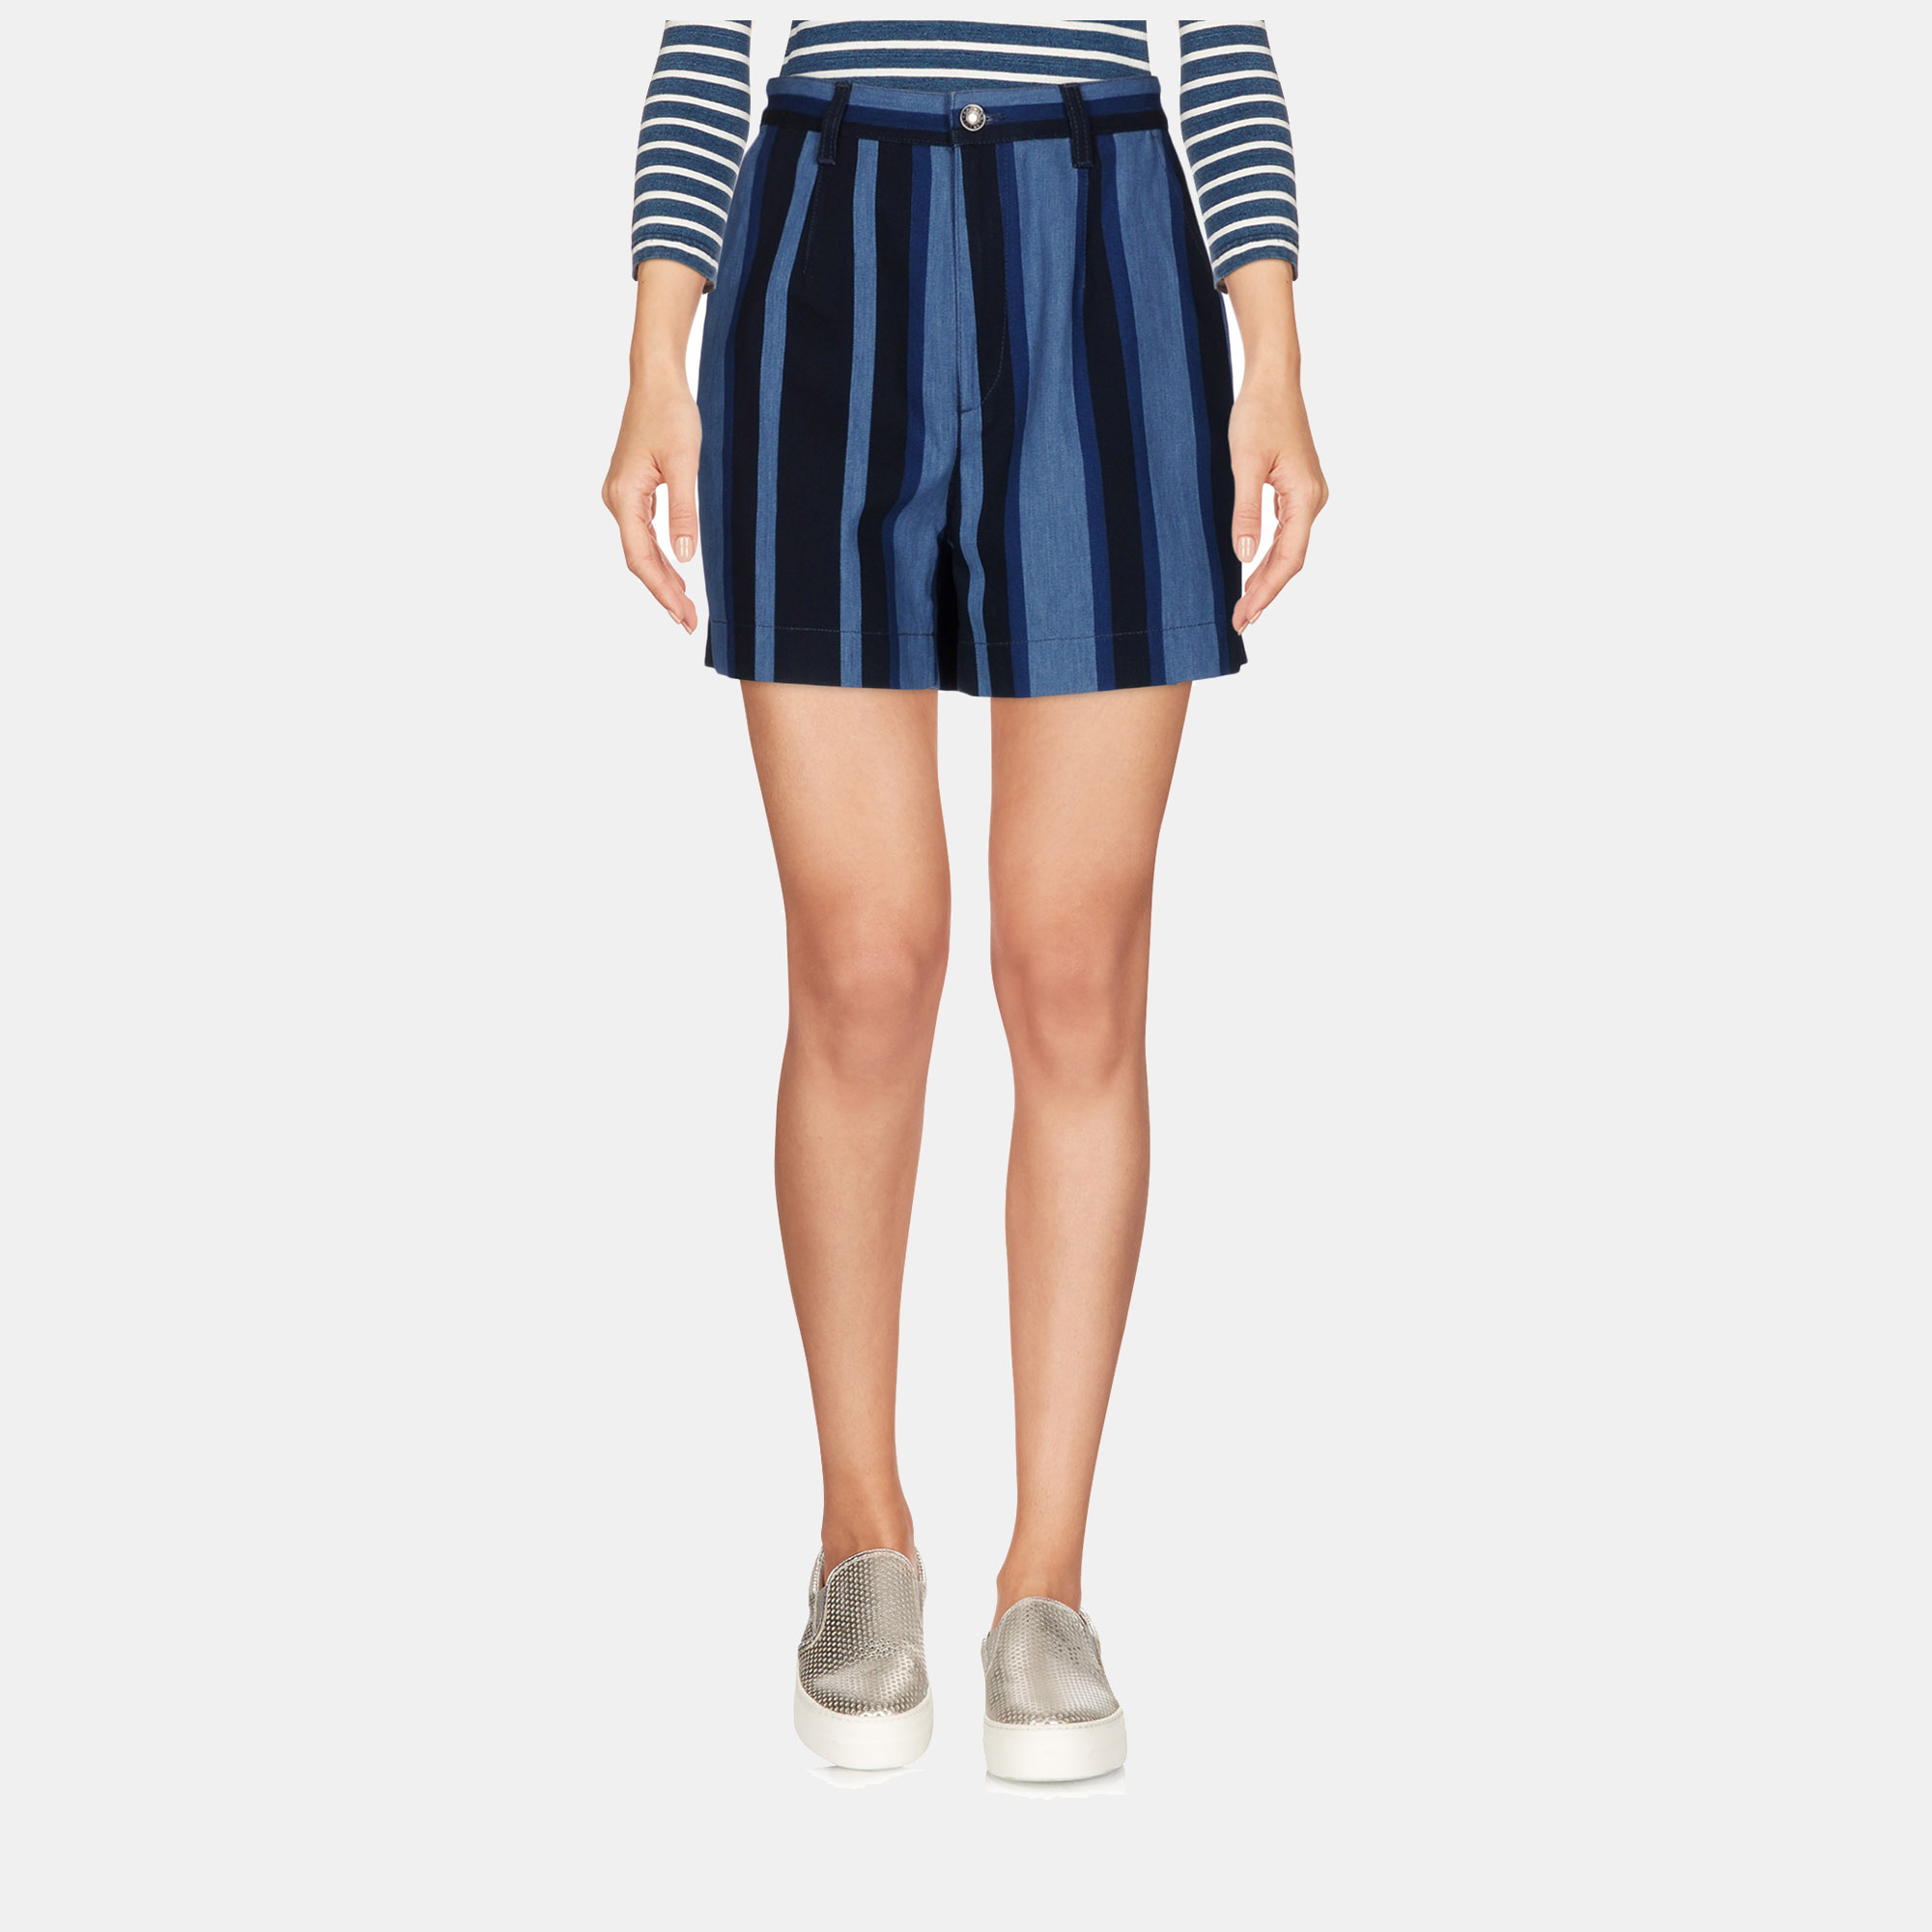 Dolce & gabbana blue striped denim shorts xxs (it 36)